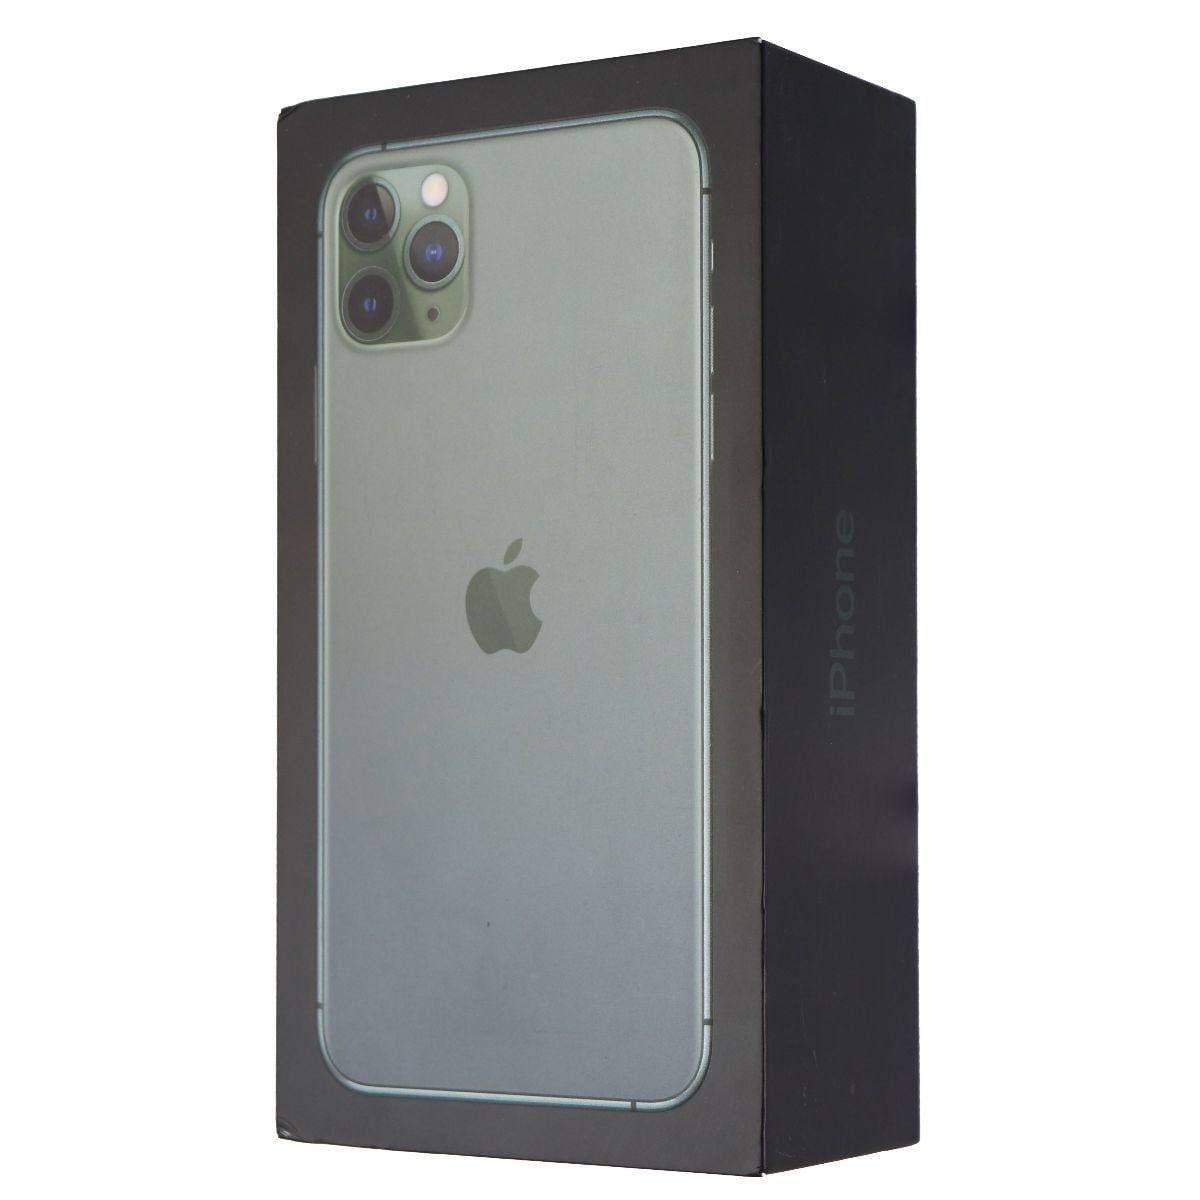 Apple iPhone 11 Pro RETAIL BOX - 256GB / Midnight Green - NO DEVICE (Used)